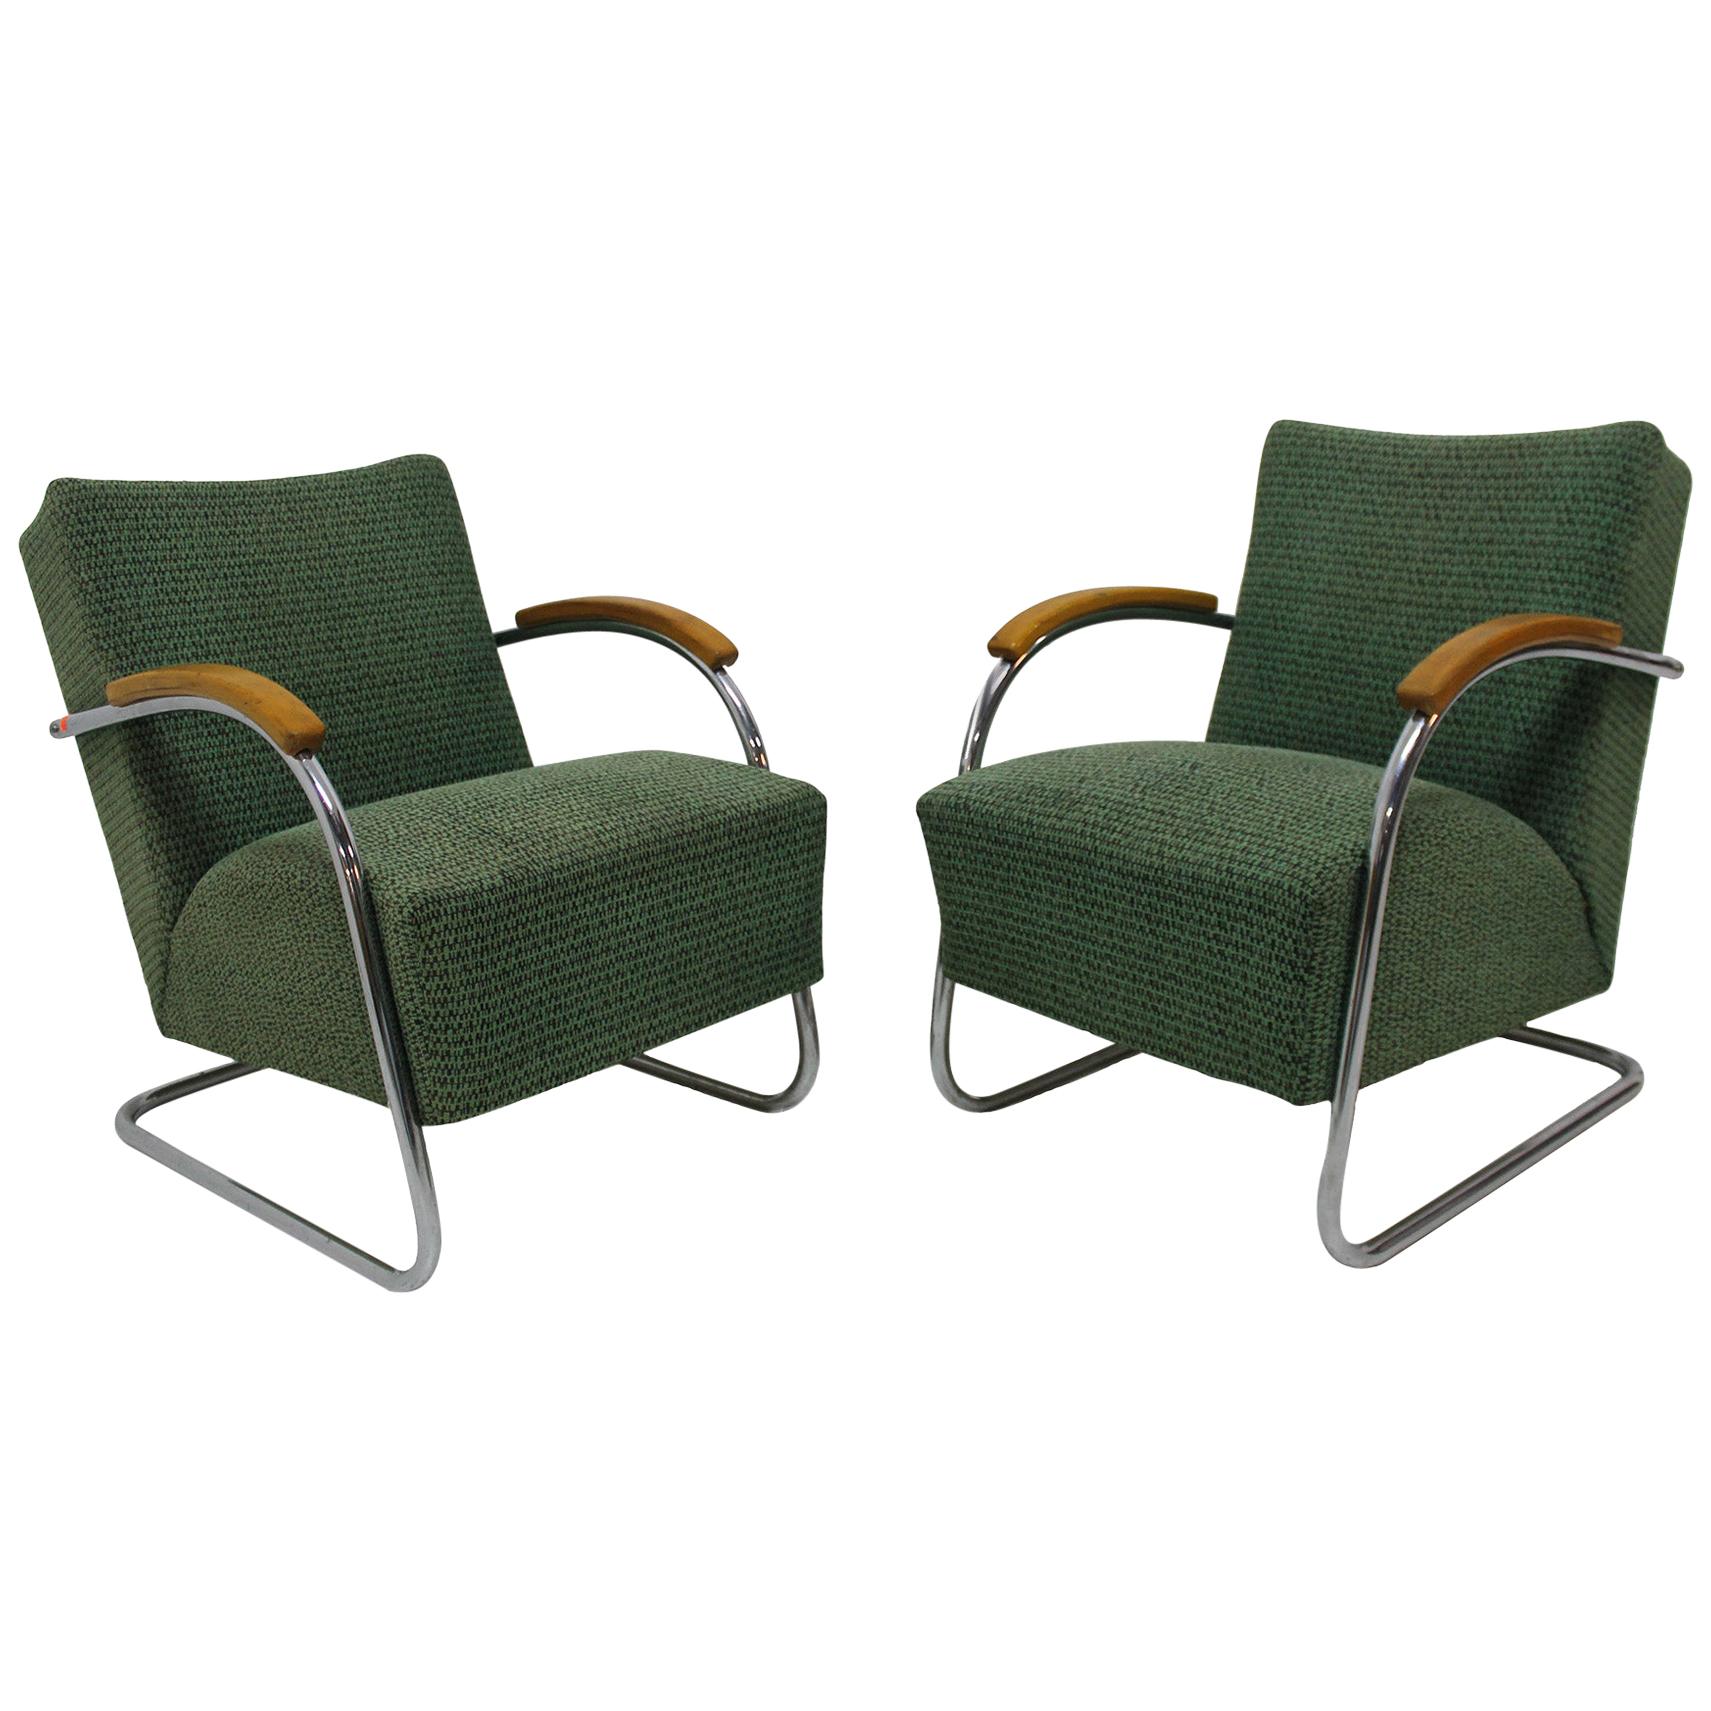 Pair of Cantilever Armchairs by Anton Lorenz, Kovona Company, 1950s